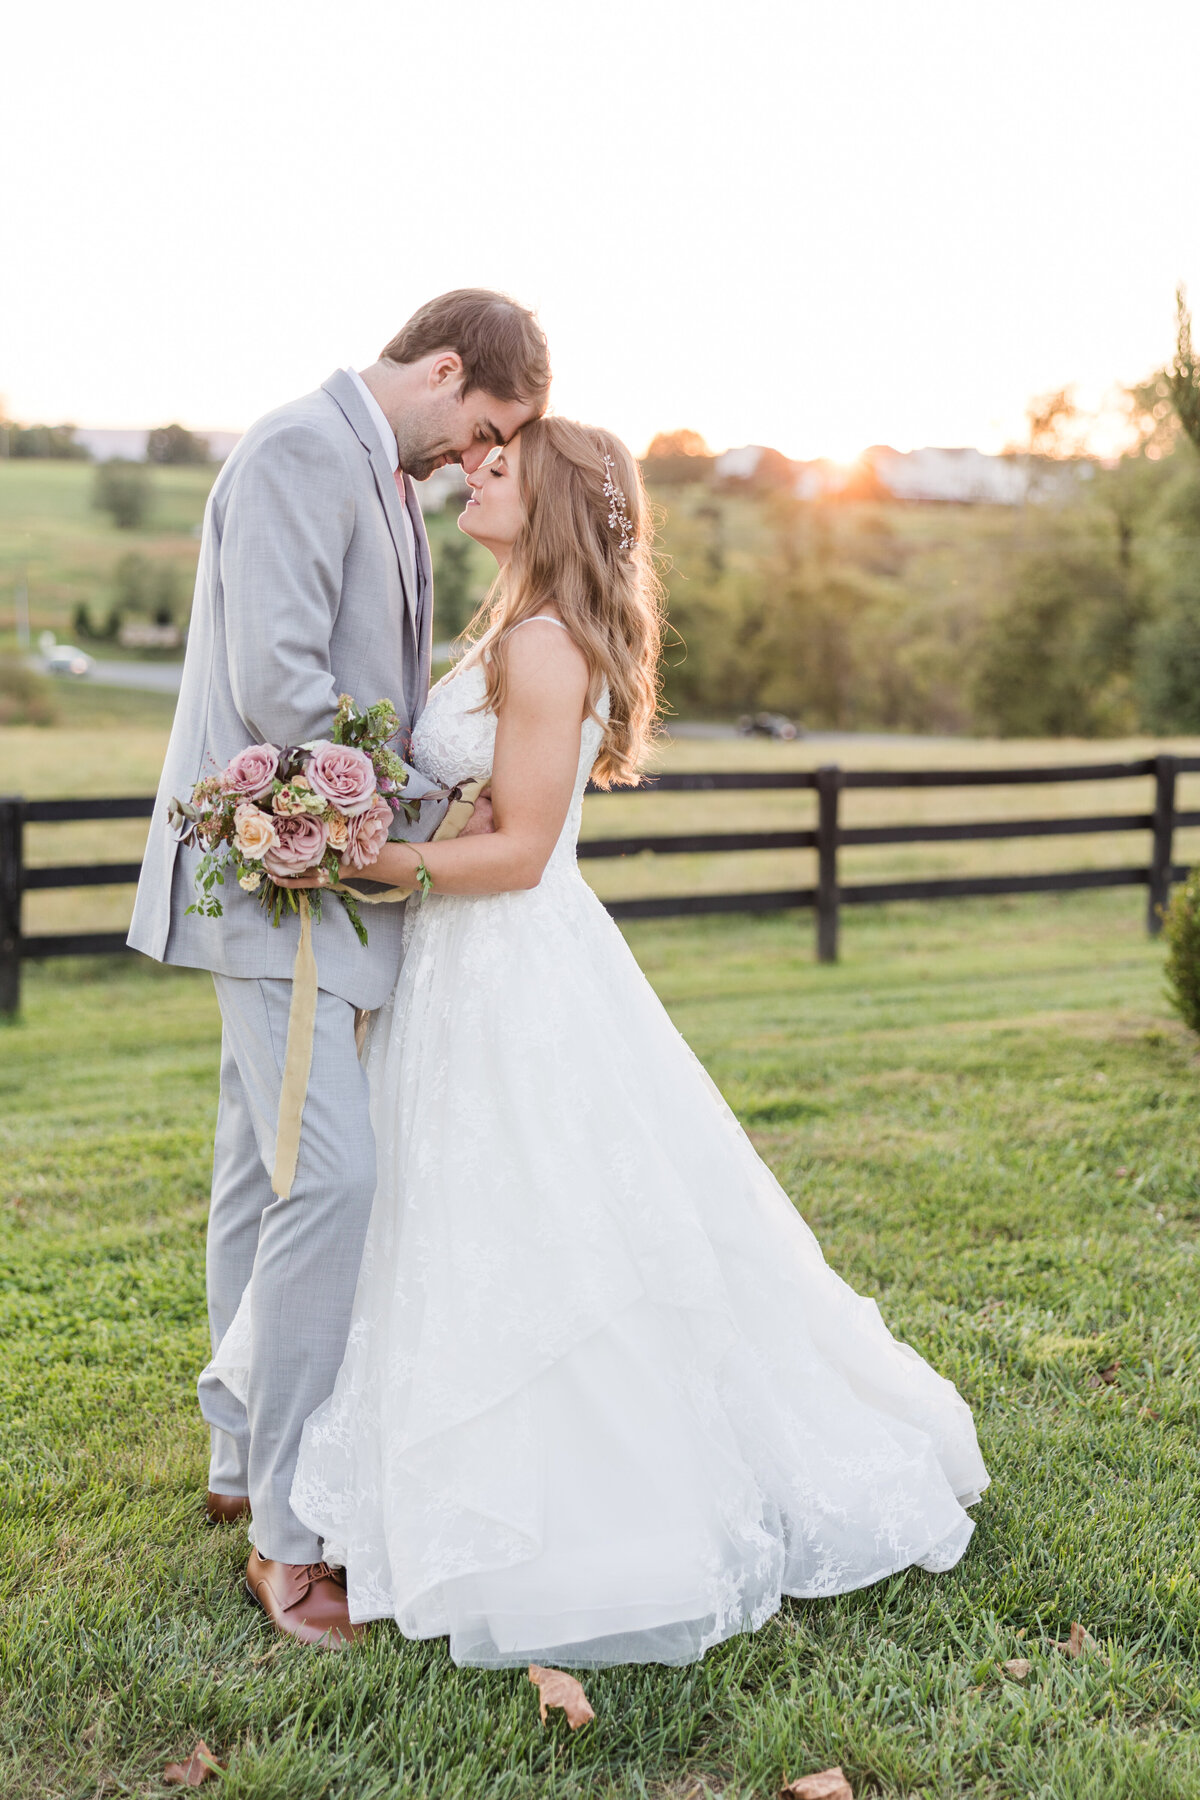 Kelsie & Marc Wedding - Taylor'd Southern Events - Maryland Wedding Photographer -2757